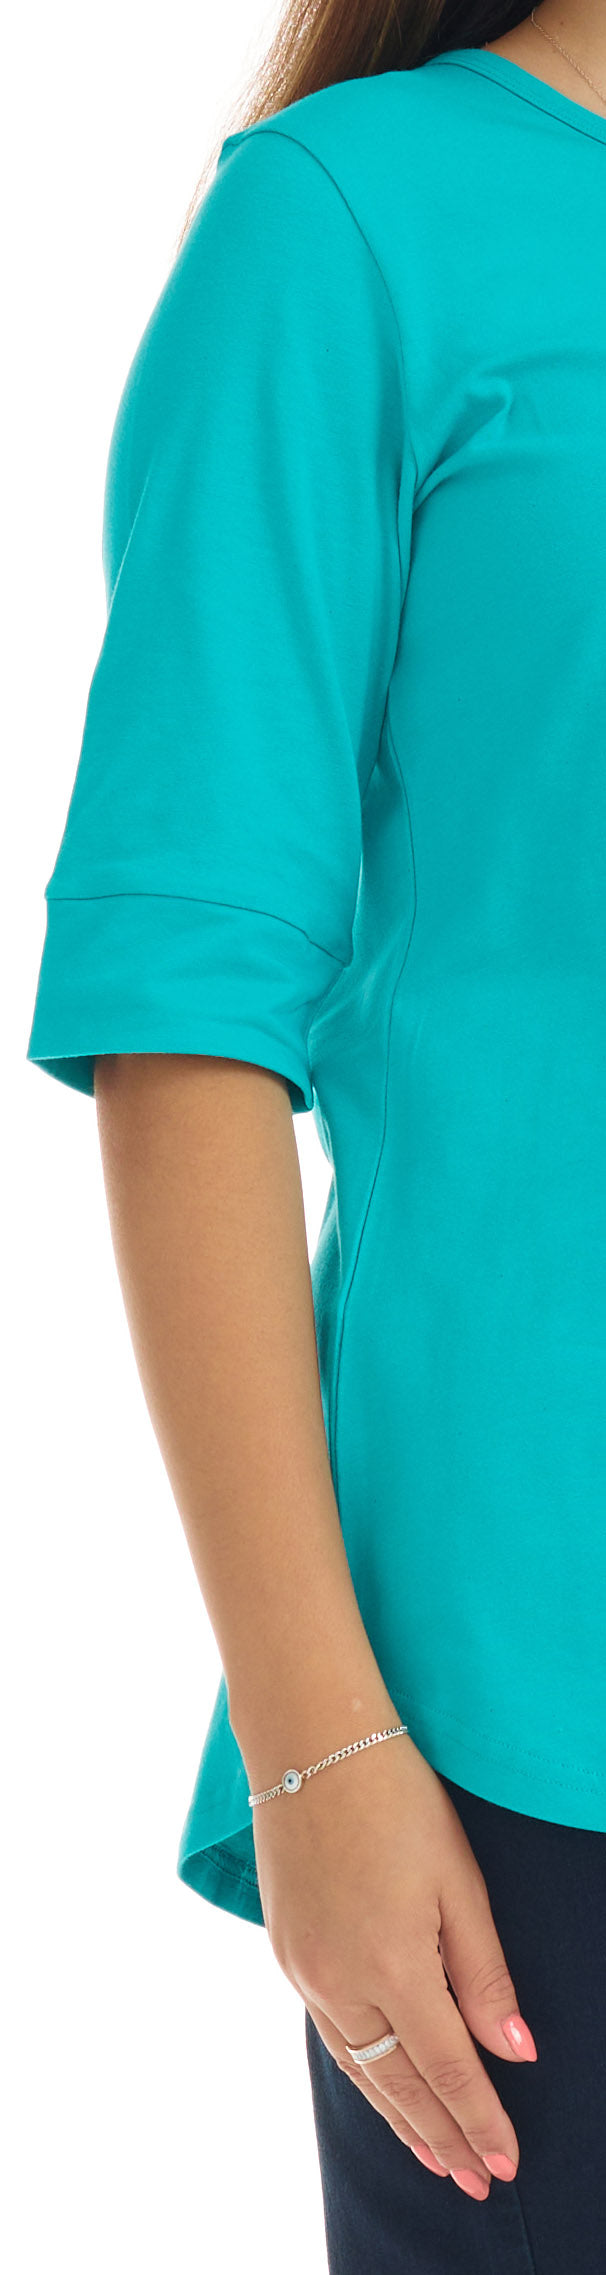 elbow sleeve turquoise cotton top